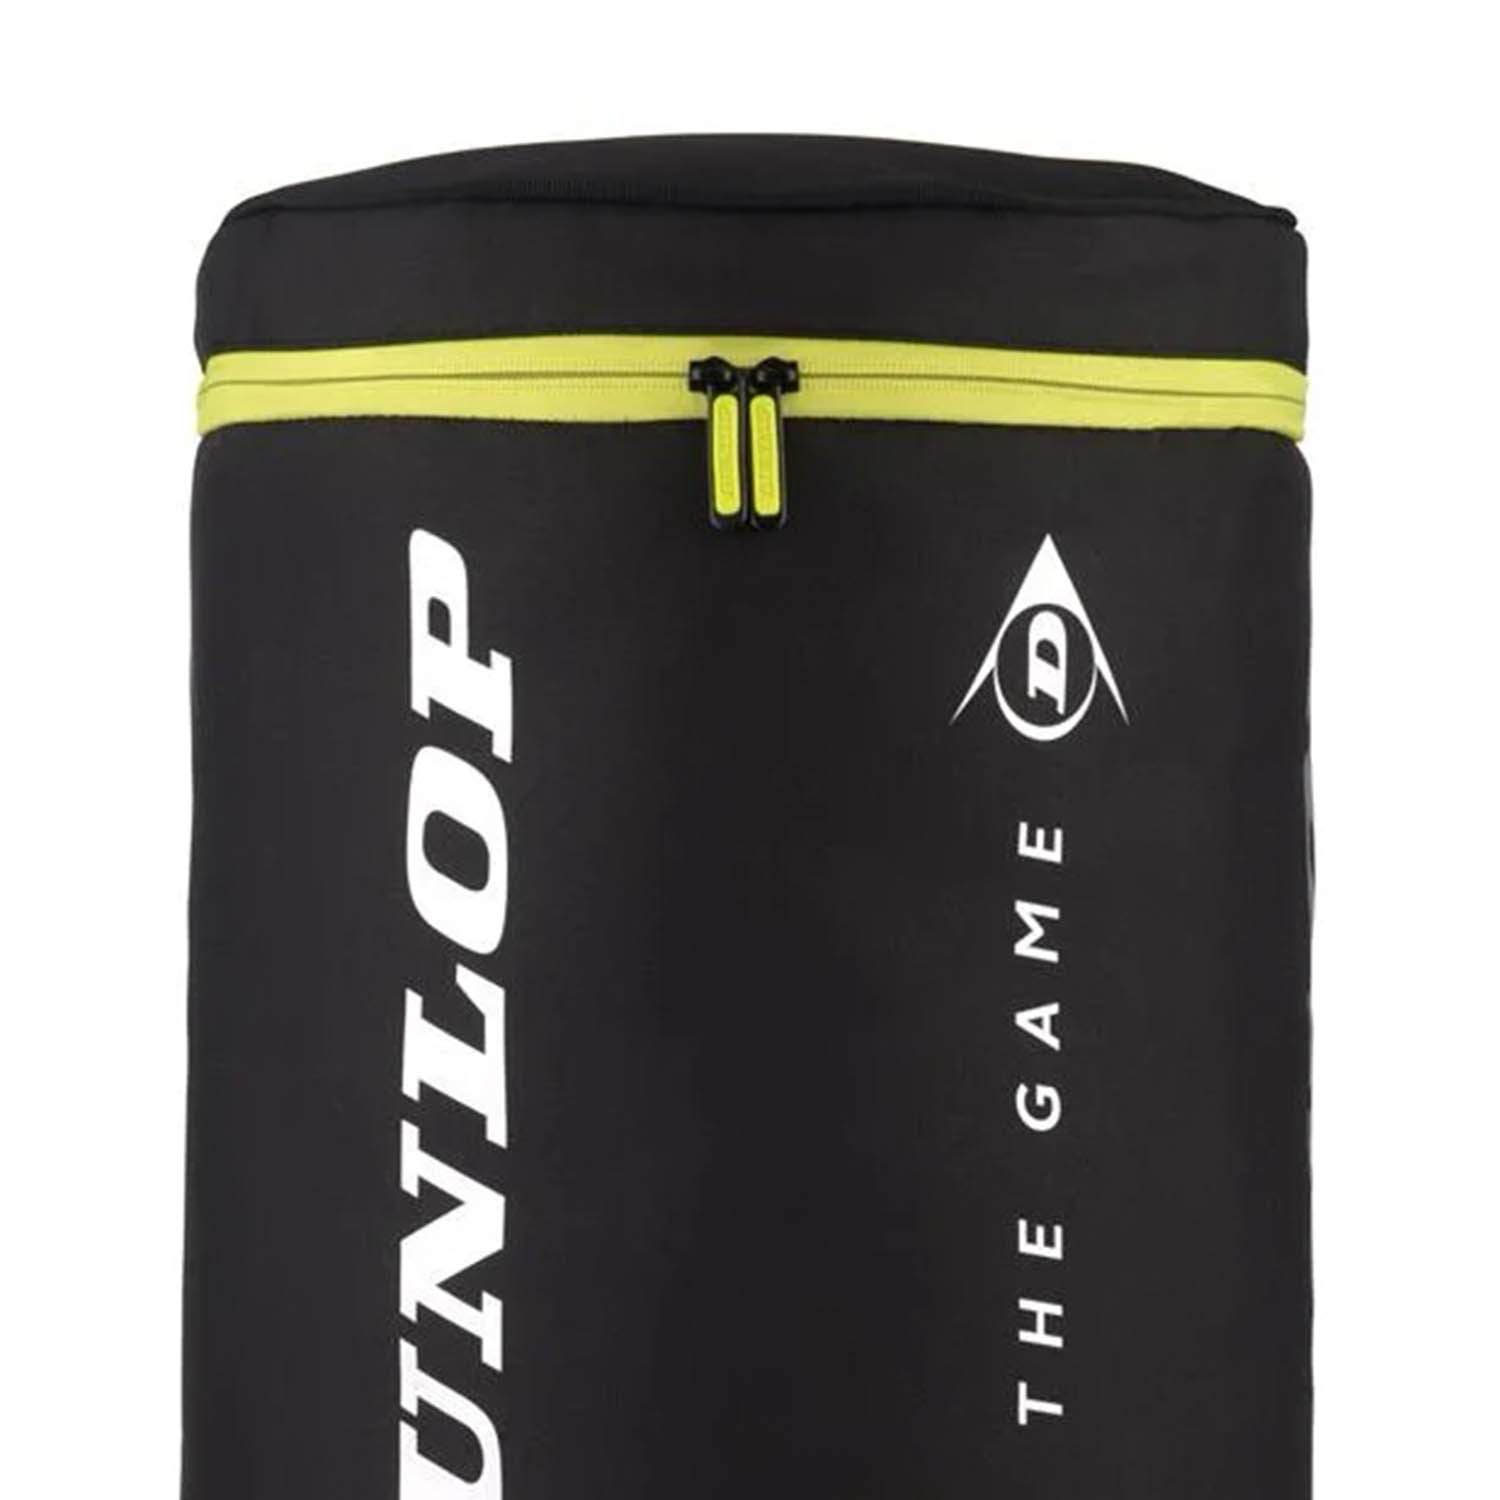 Dunlop Tac Ball x 100 Bolsa para Pelotas - Black